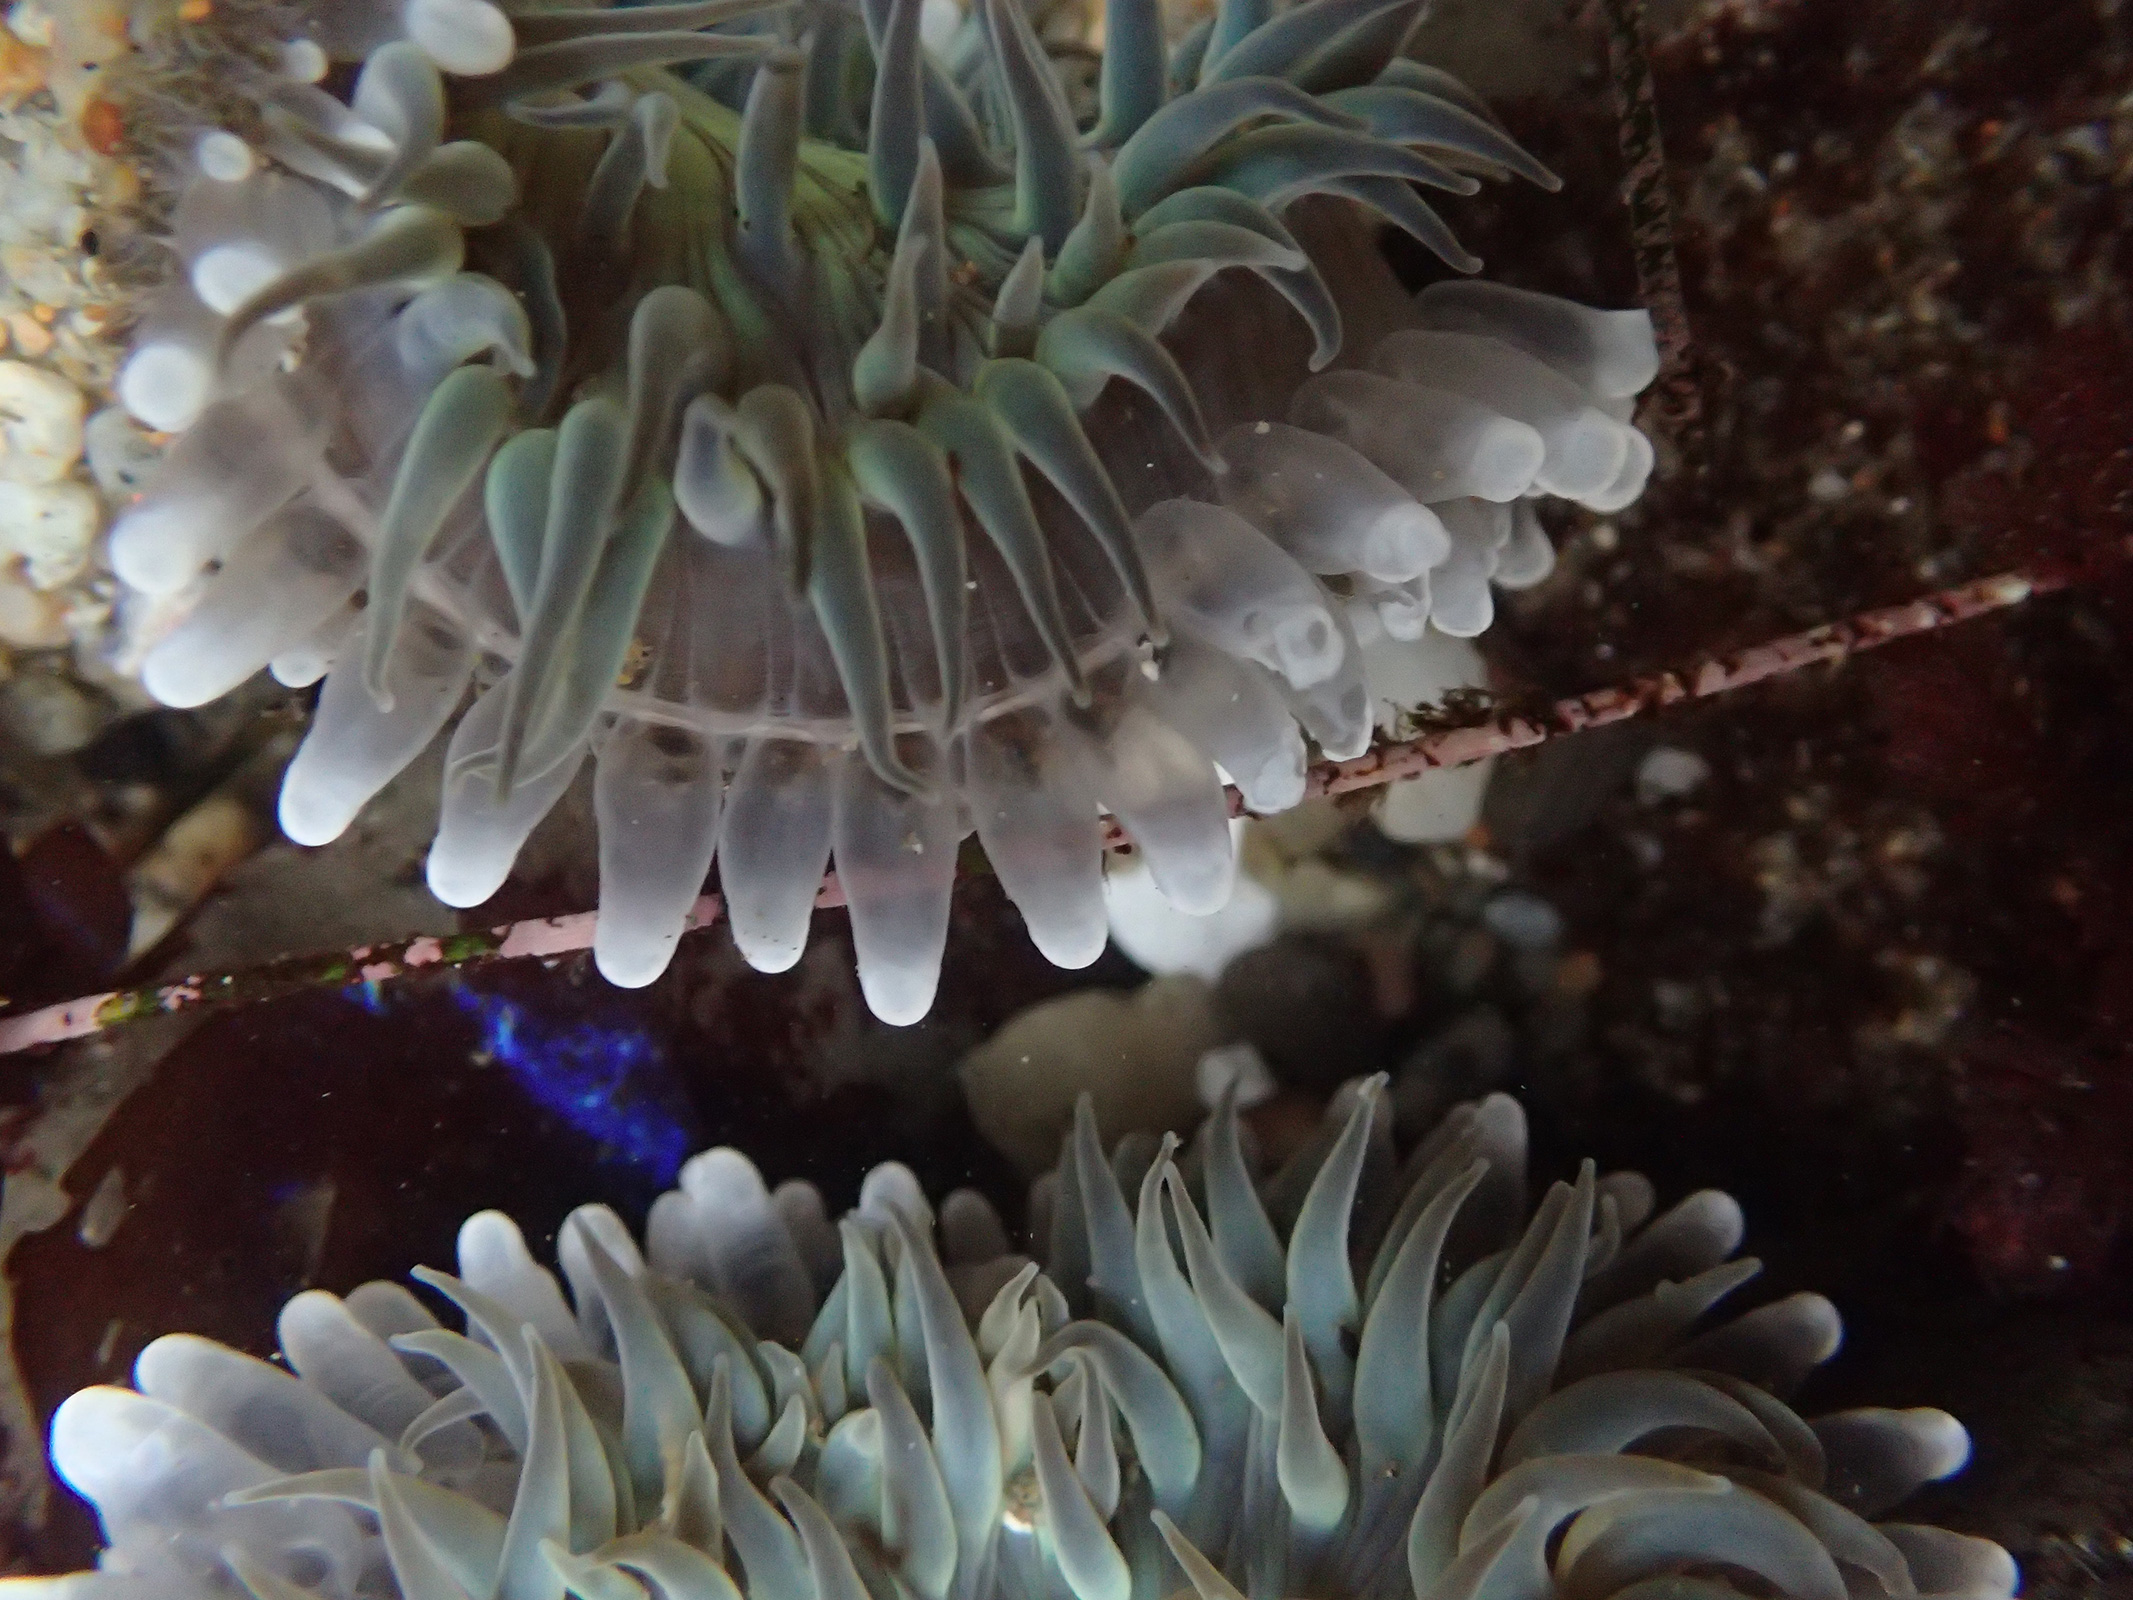 anemone fight